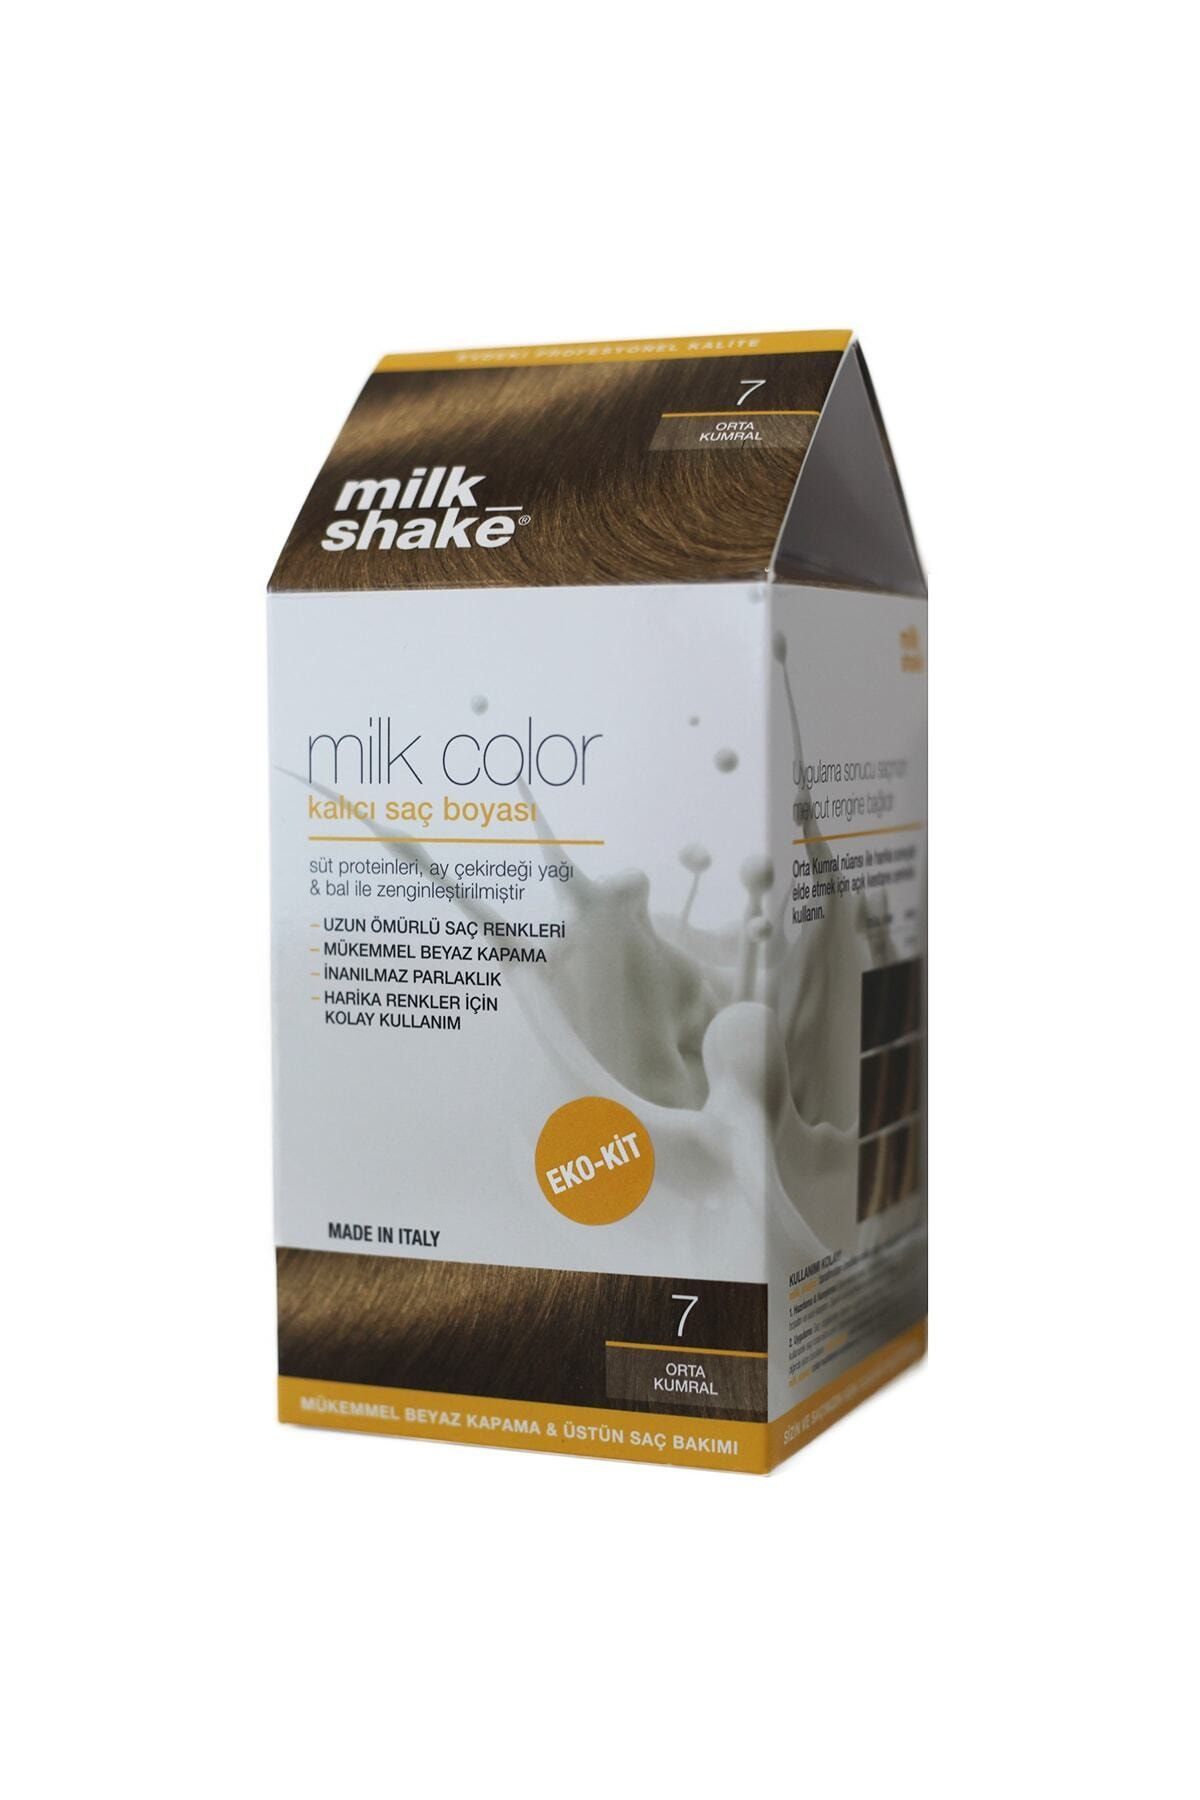 Milkshake Milk Color Eko-kit Orta Kumral -7 (Köpüksüz)